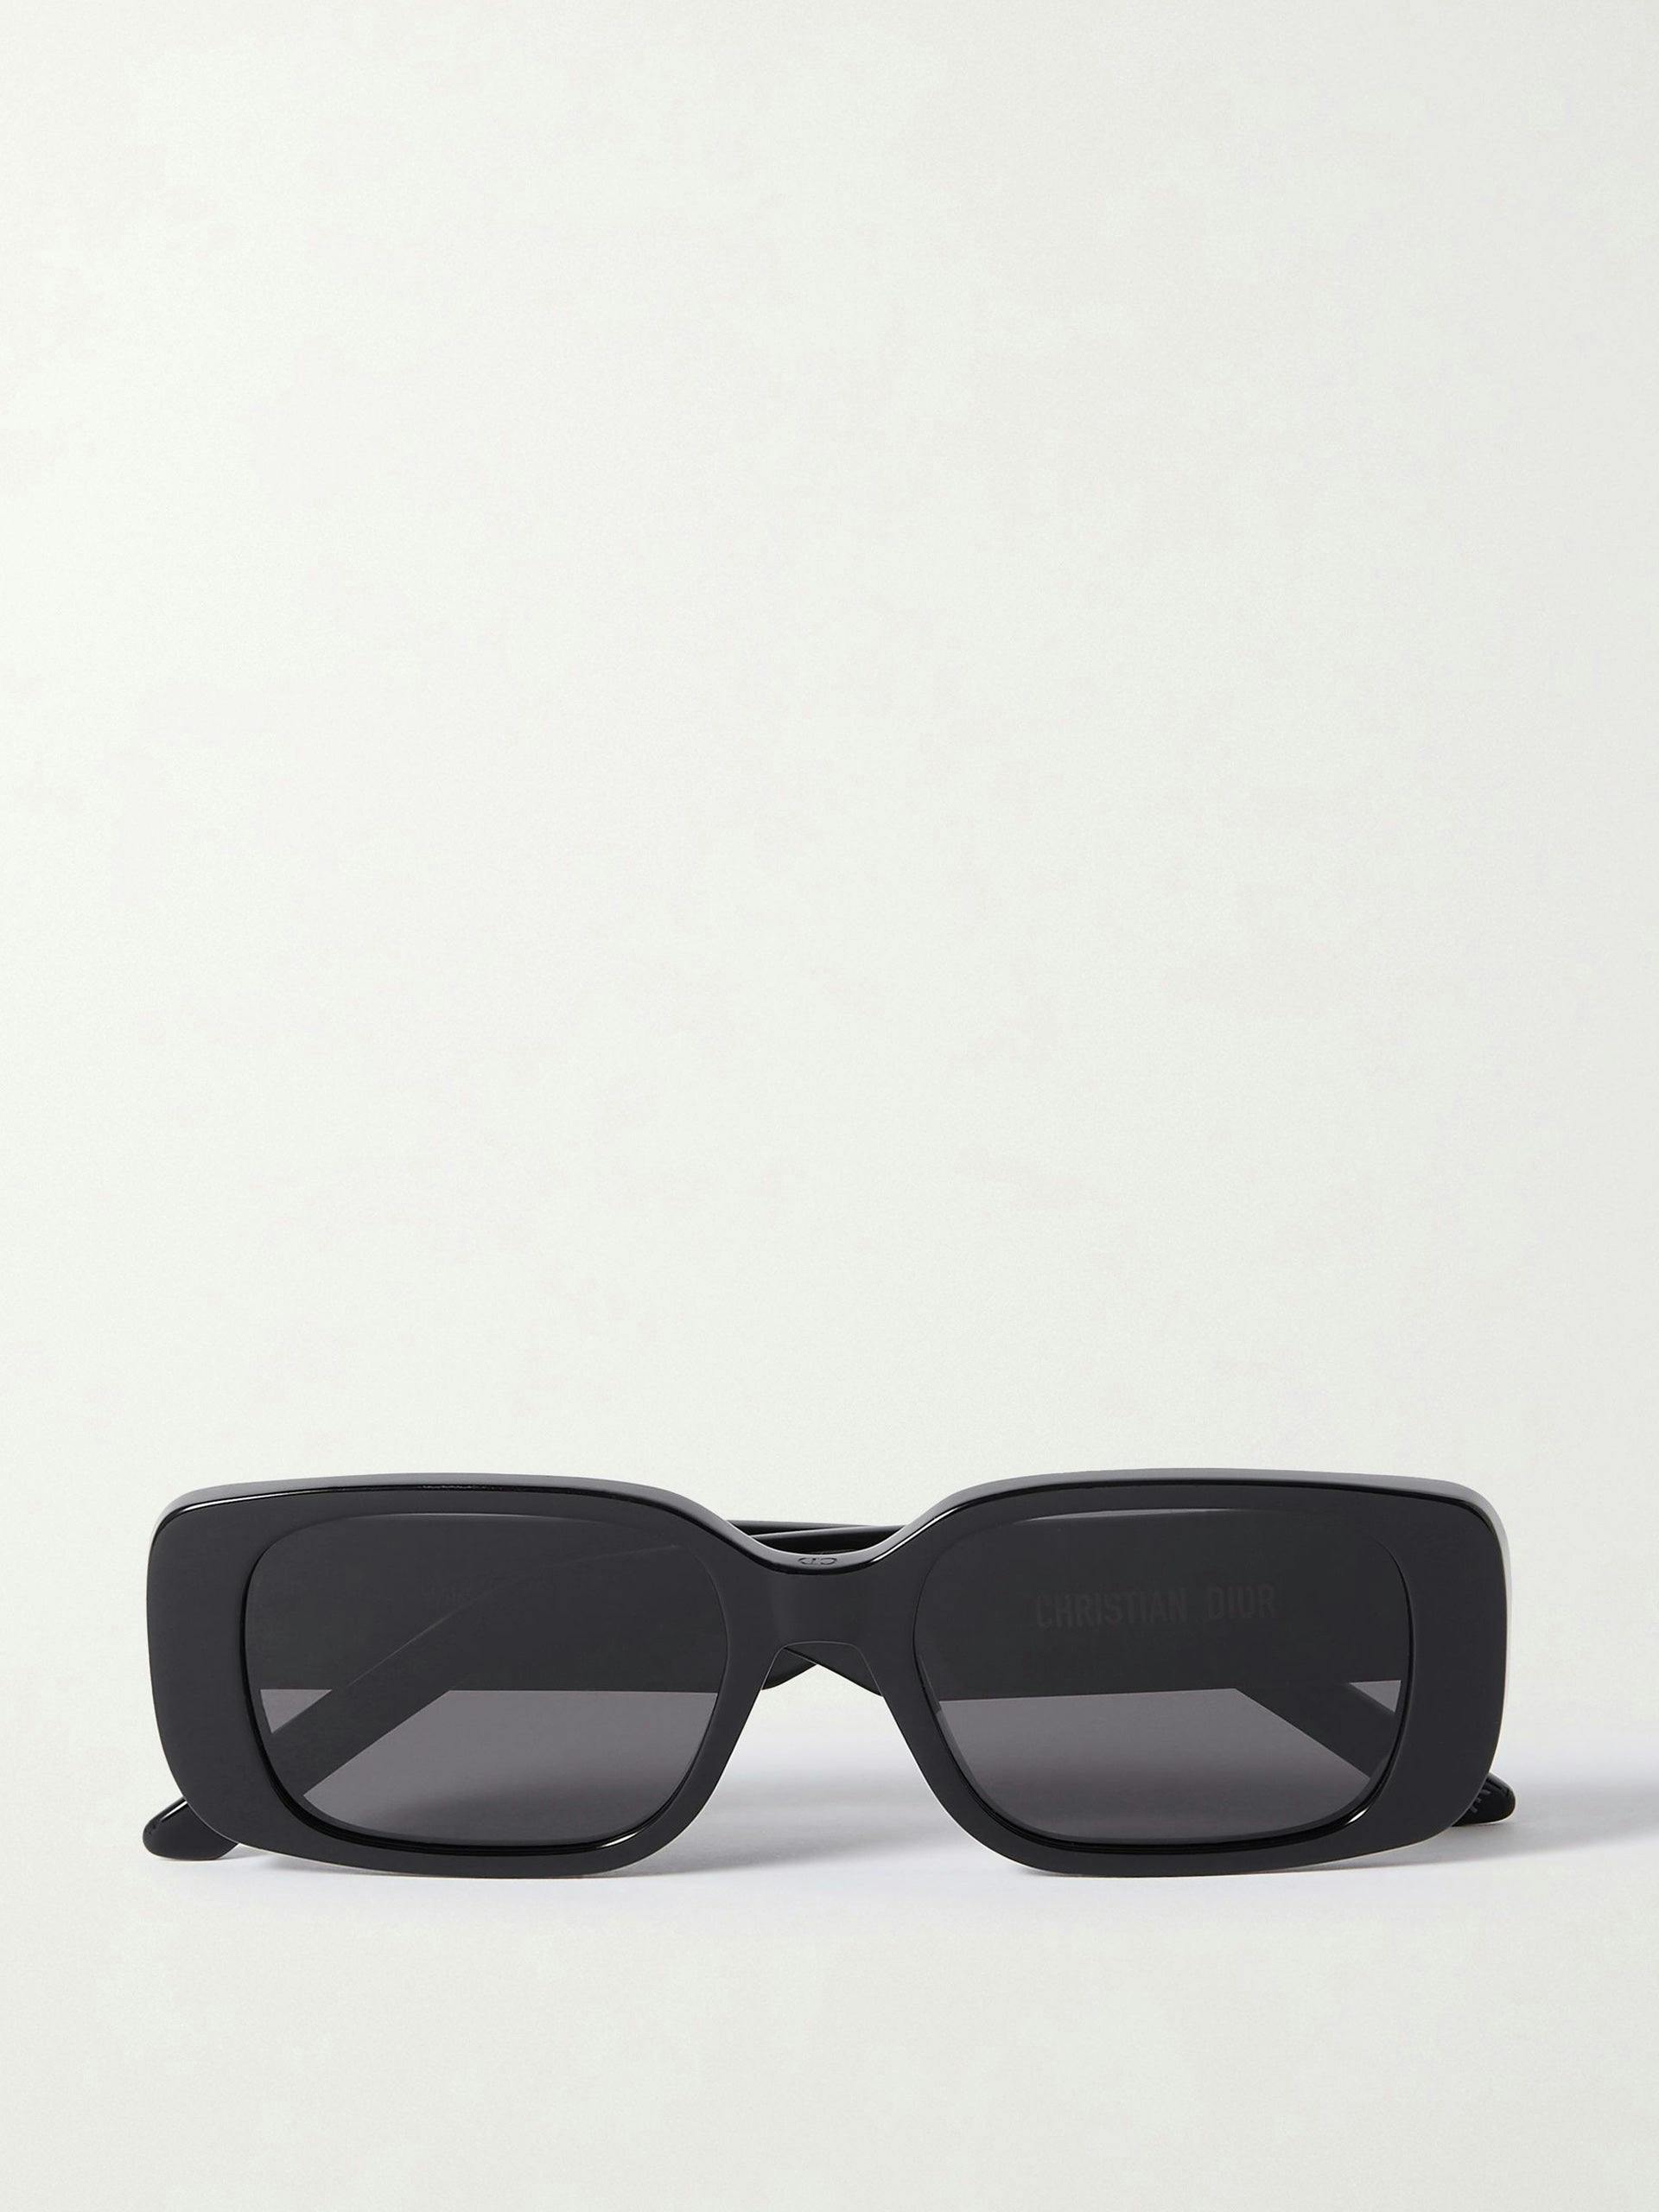 Wildior S2U rectangular-frame acetate sunglasses